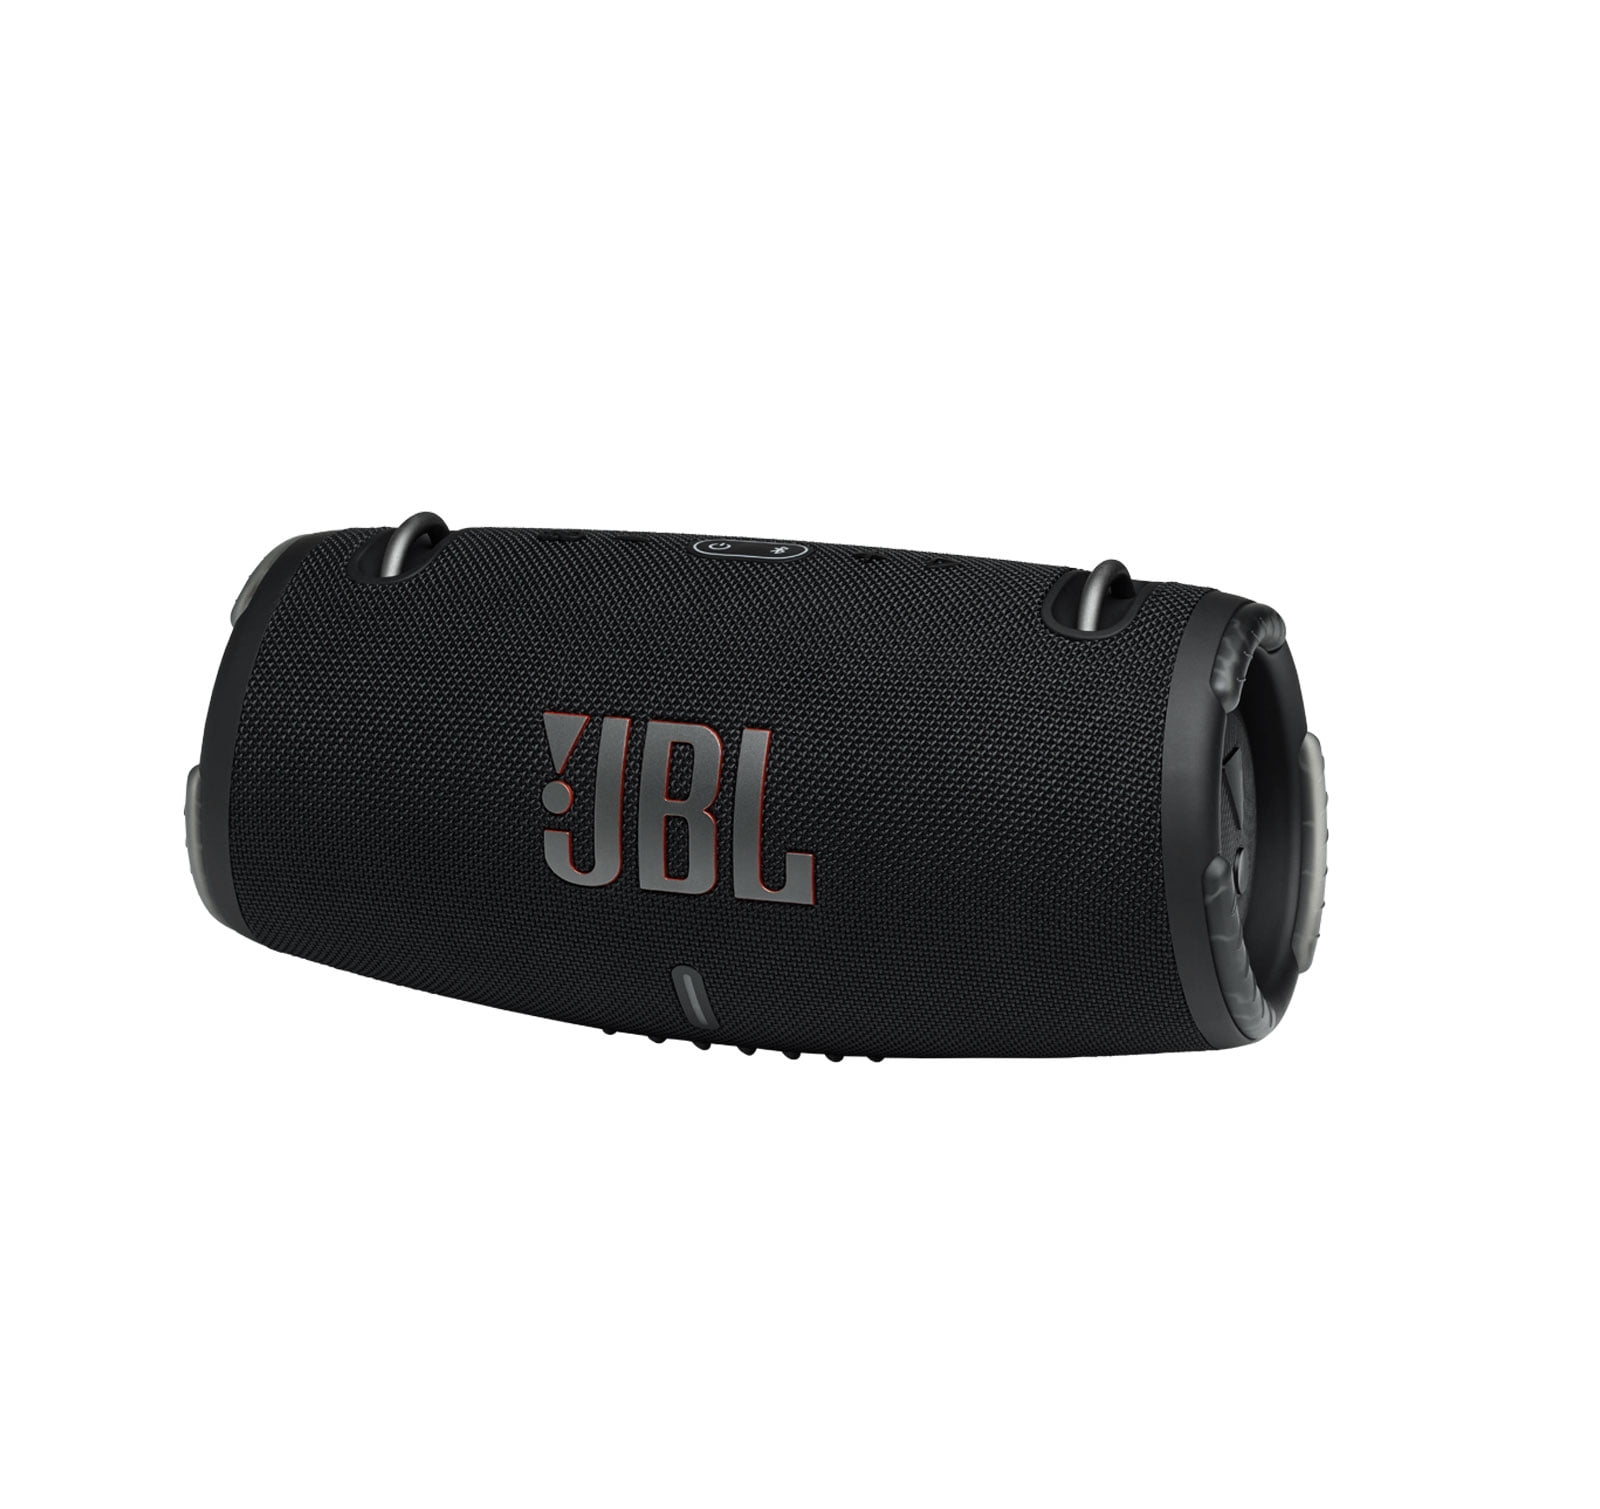  JBL Xtreme 3 Portable Waterproof/Dustproof Bluetooth Speaker  Bundle with divvi! Protective Hardshell Case - Black : Electronics